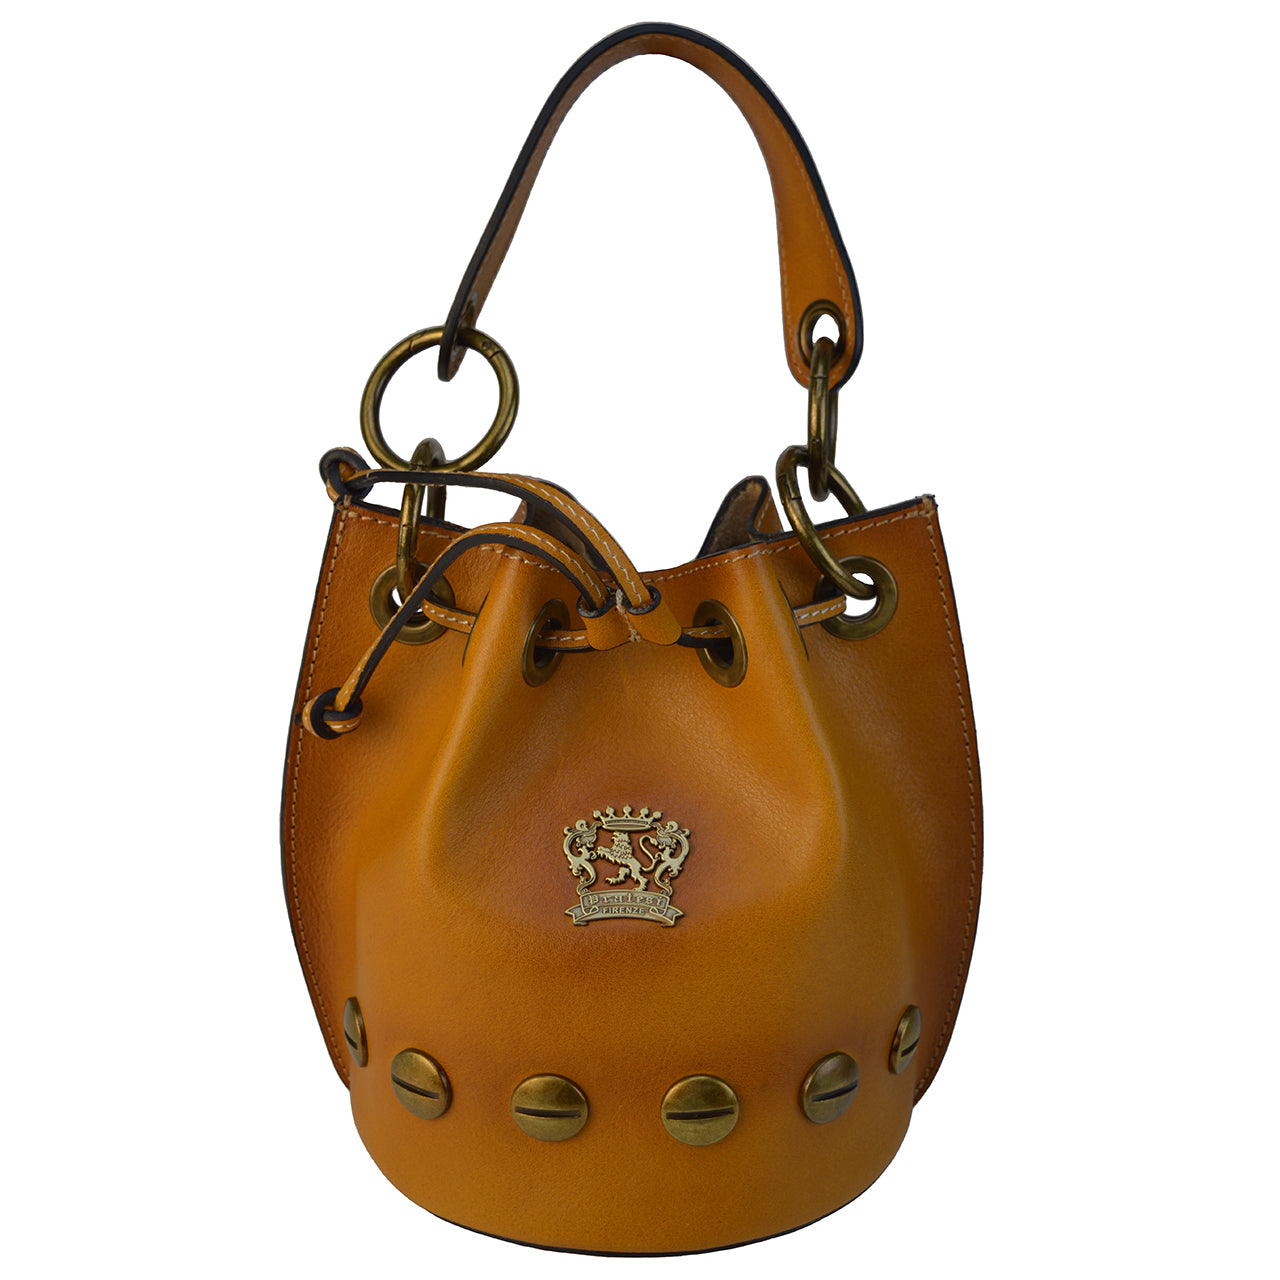 Pratesi Campagnatico backet bag B495 - Vegetable Tanned Italian Leather Cognac